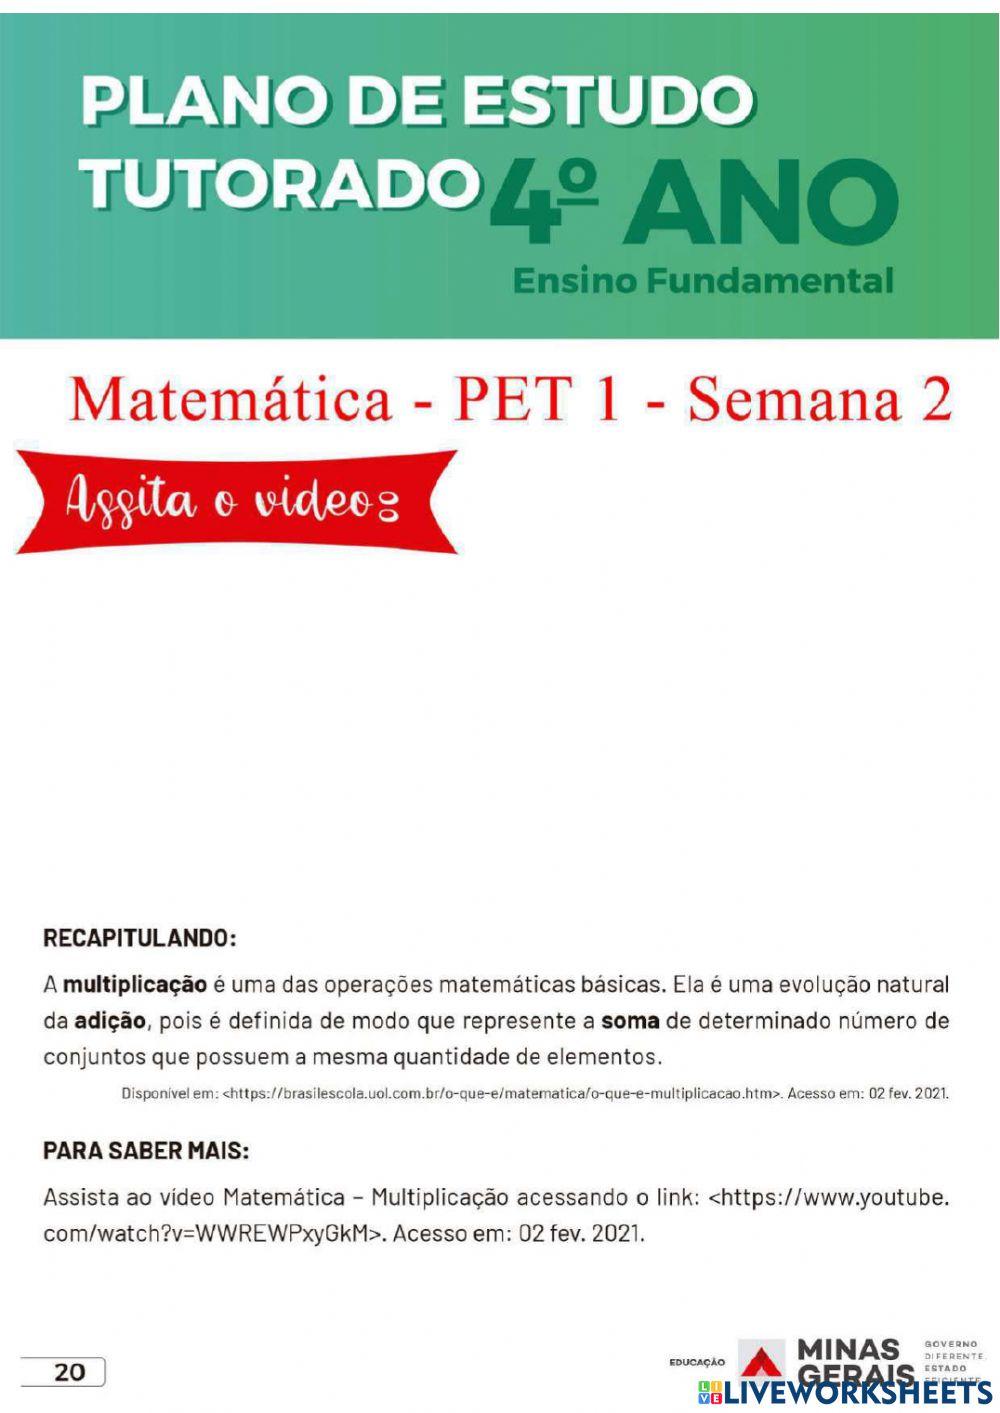 Matemática - Pet 1 - Semana 2